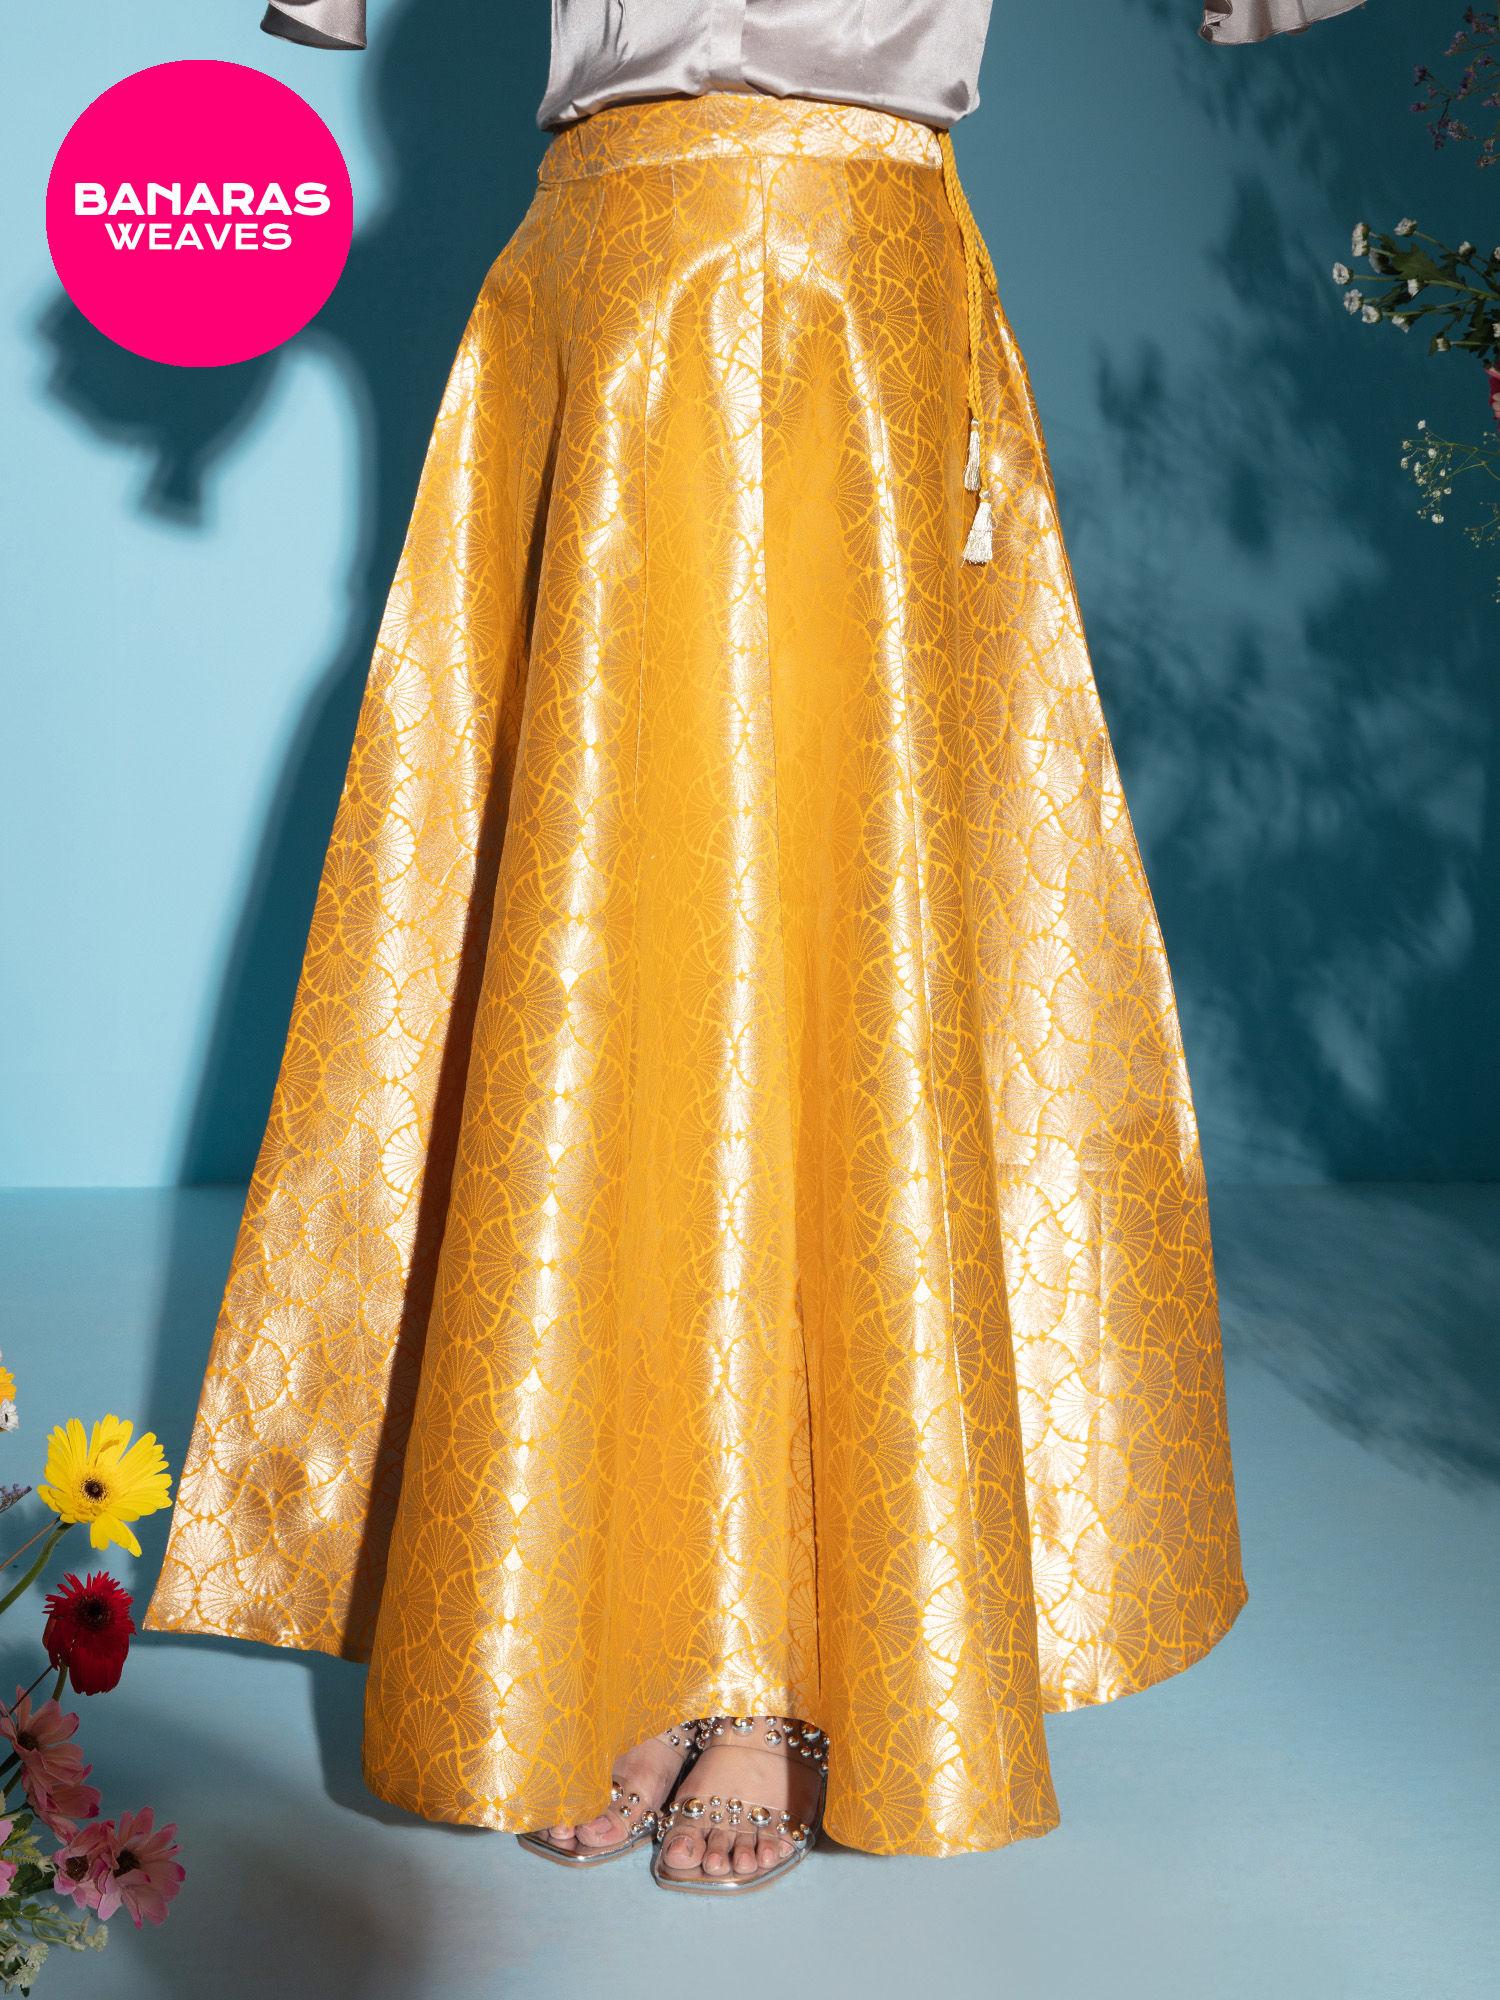 banaras yellow brocade skirt ggsrt02